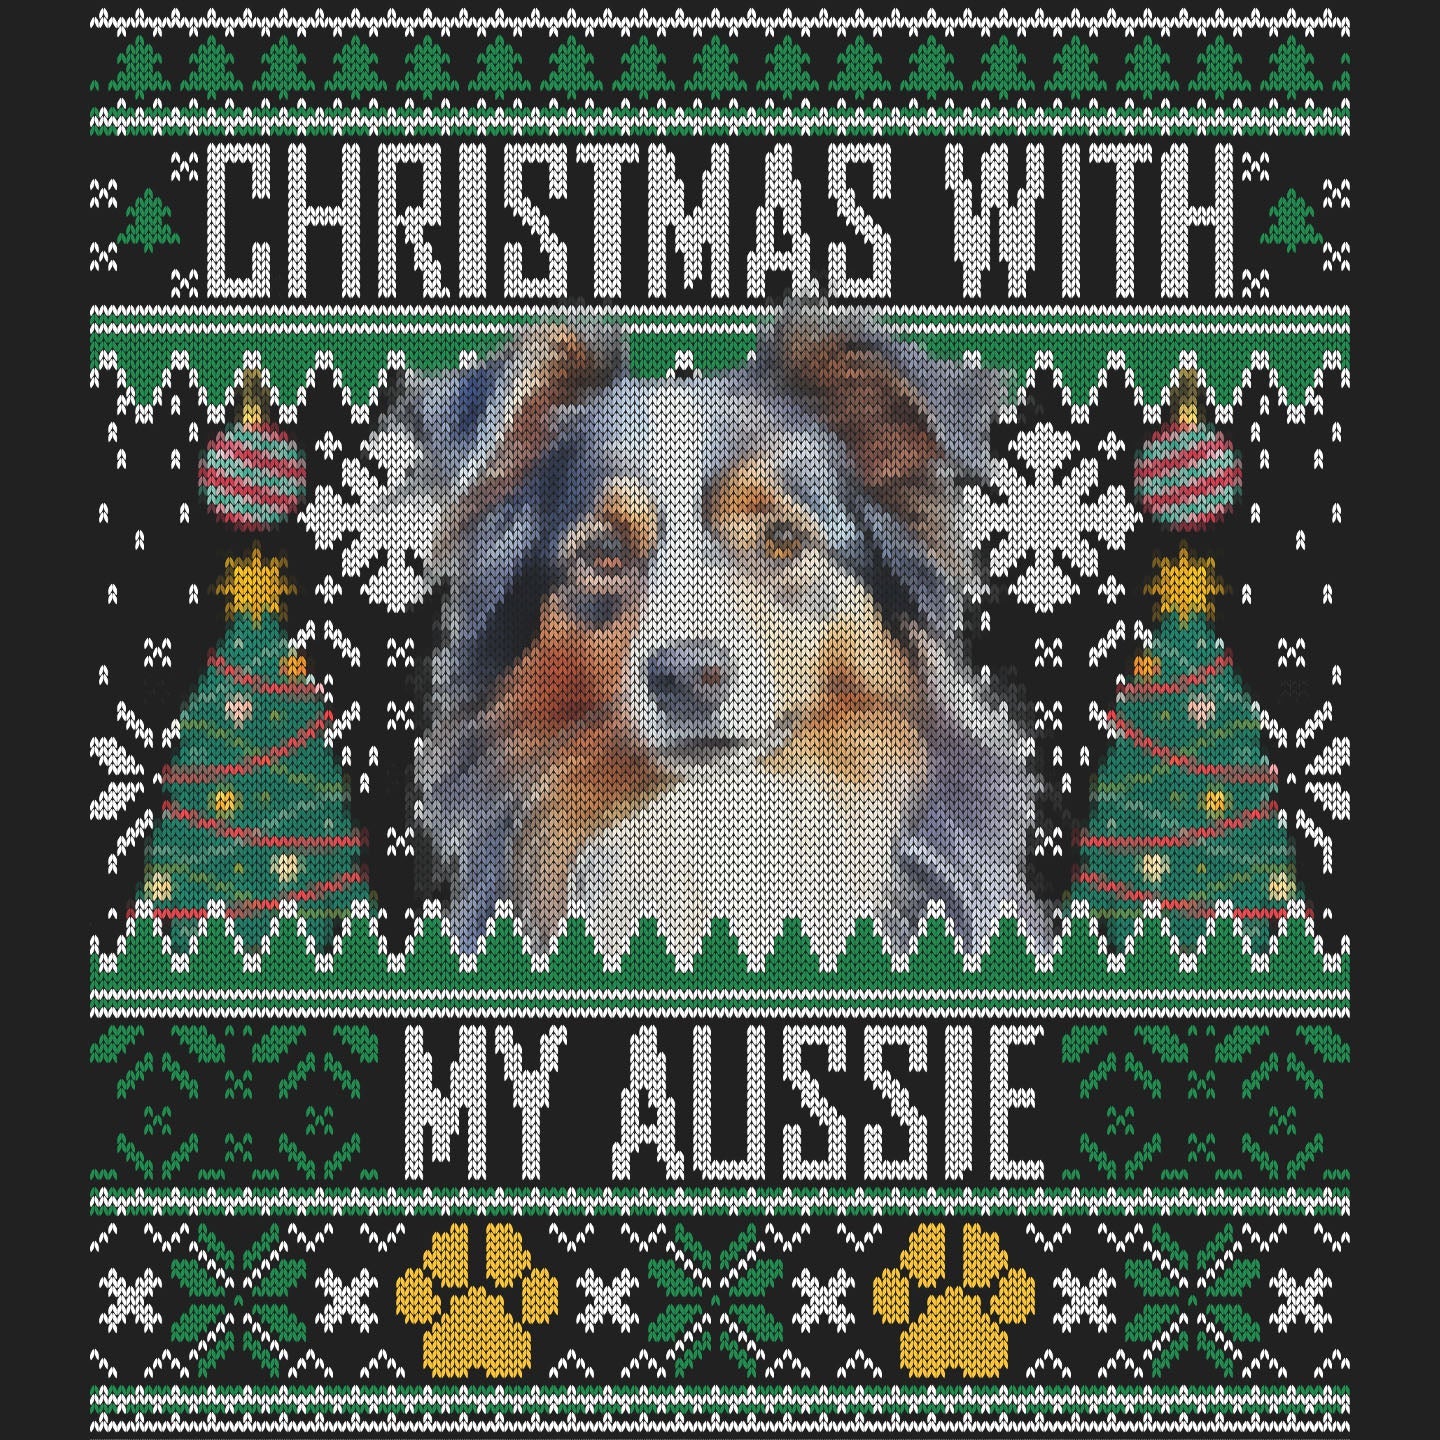 Ugly Sweater Christmas with My Australian Shepherd - Women's V-Neck Long Sleeve T-Shirt